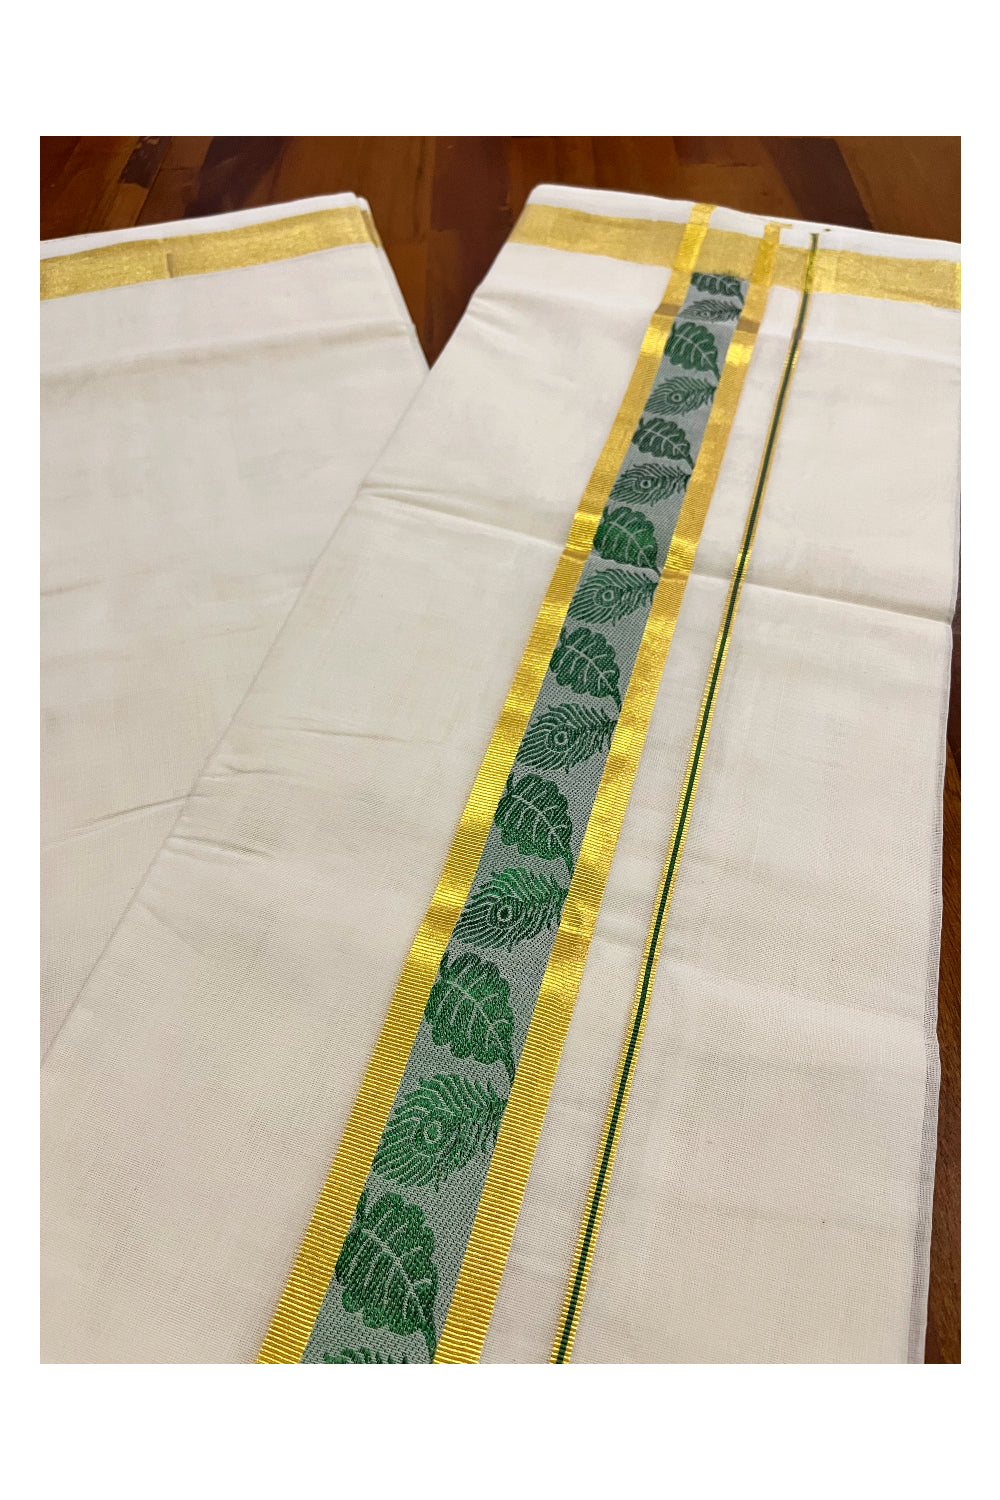 Southloom Premium Wedding Handloom Cotton Mundu with Green and Golden Kasavu Woven Border (South Indian Kerala Dhoti)